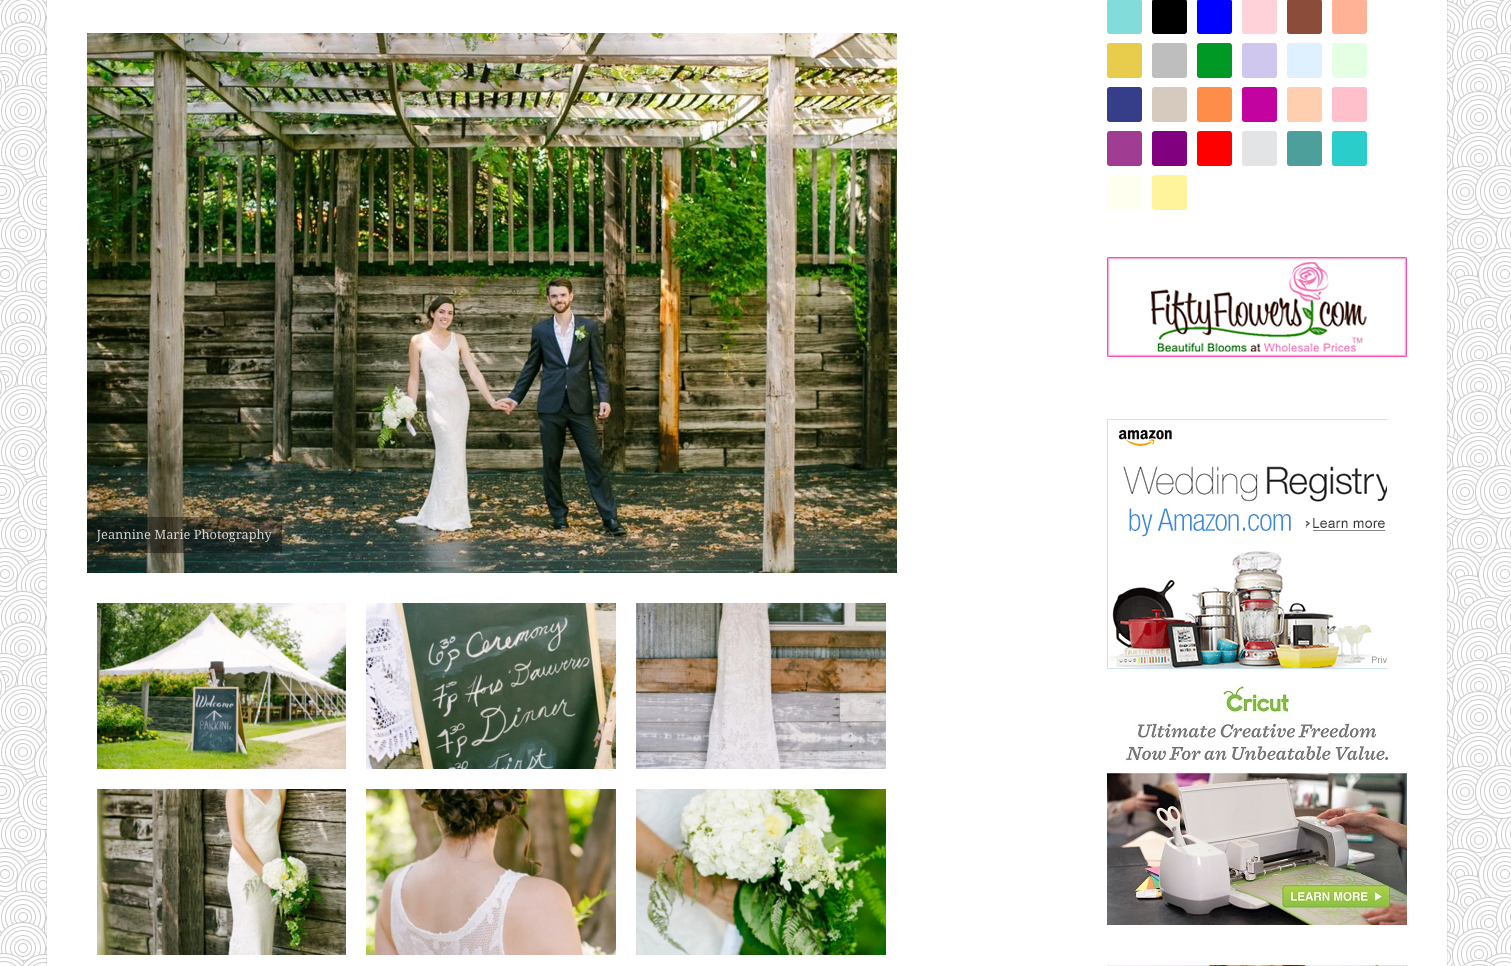 DIY Weddings Magazine, DIY wedding, bride, groom, Saint Paul wedding photographer, Gardens of Castle Rock